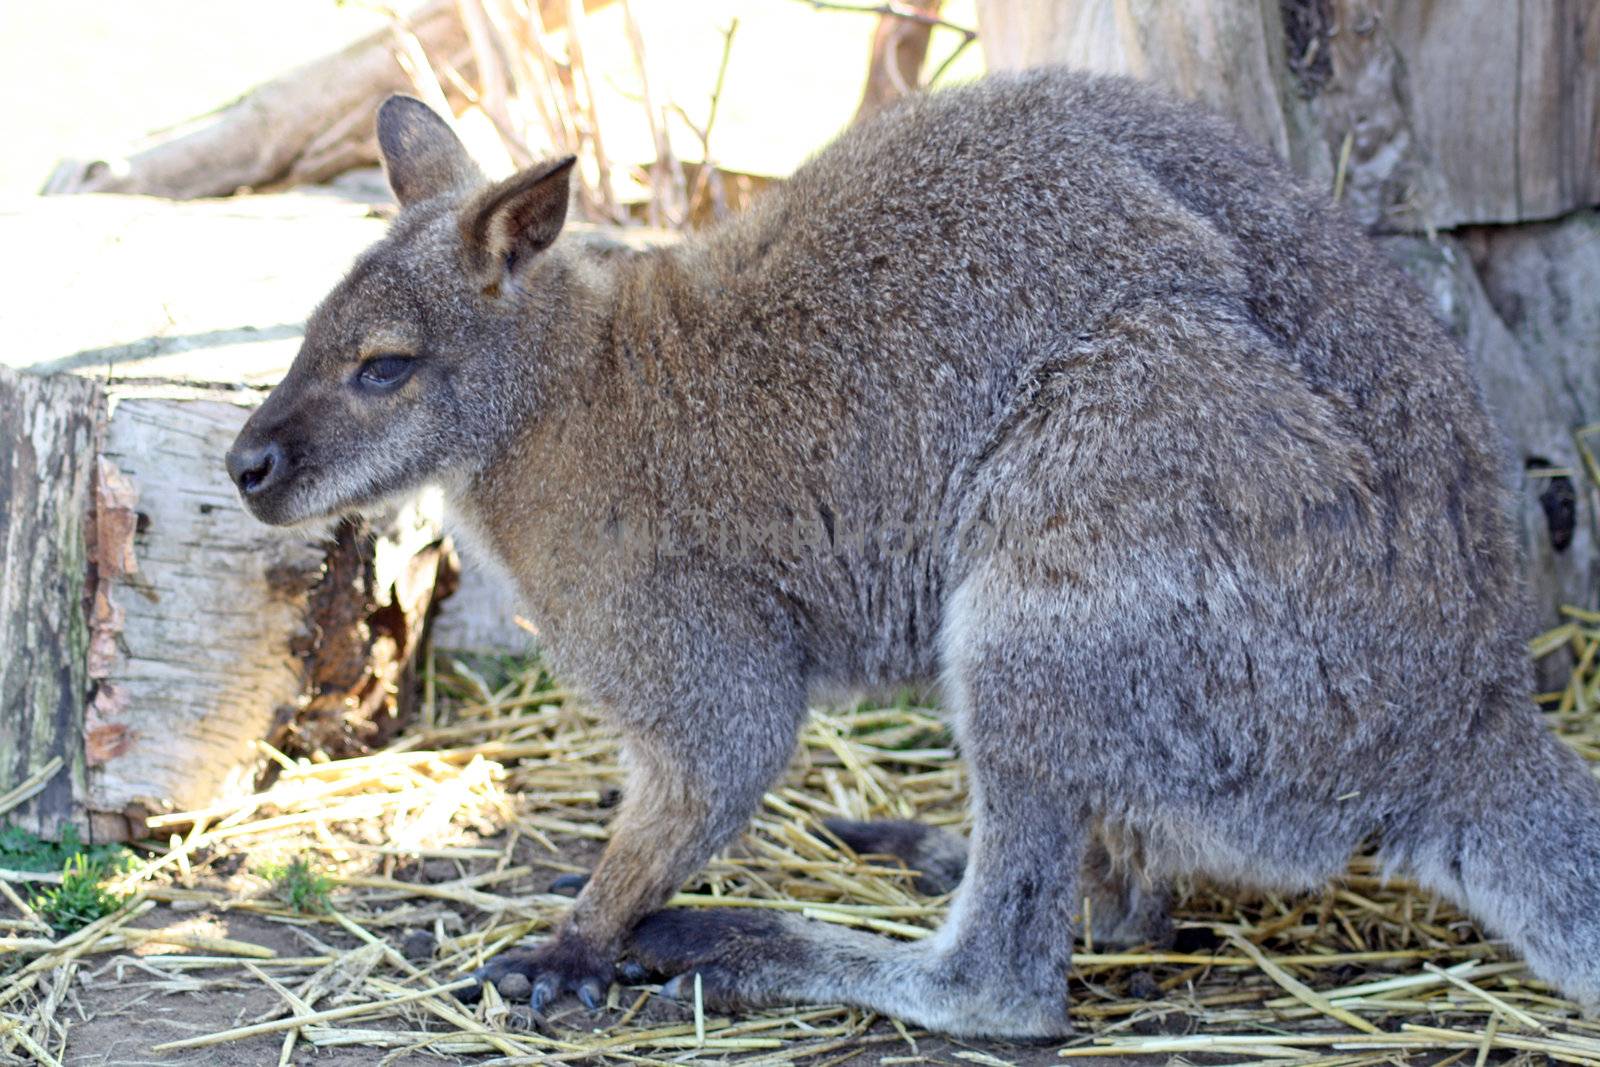 stunning wallaby